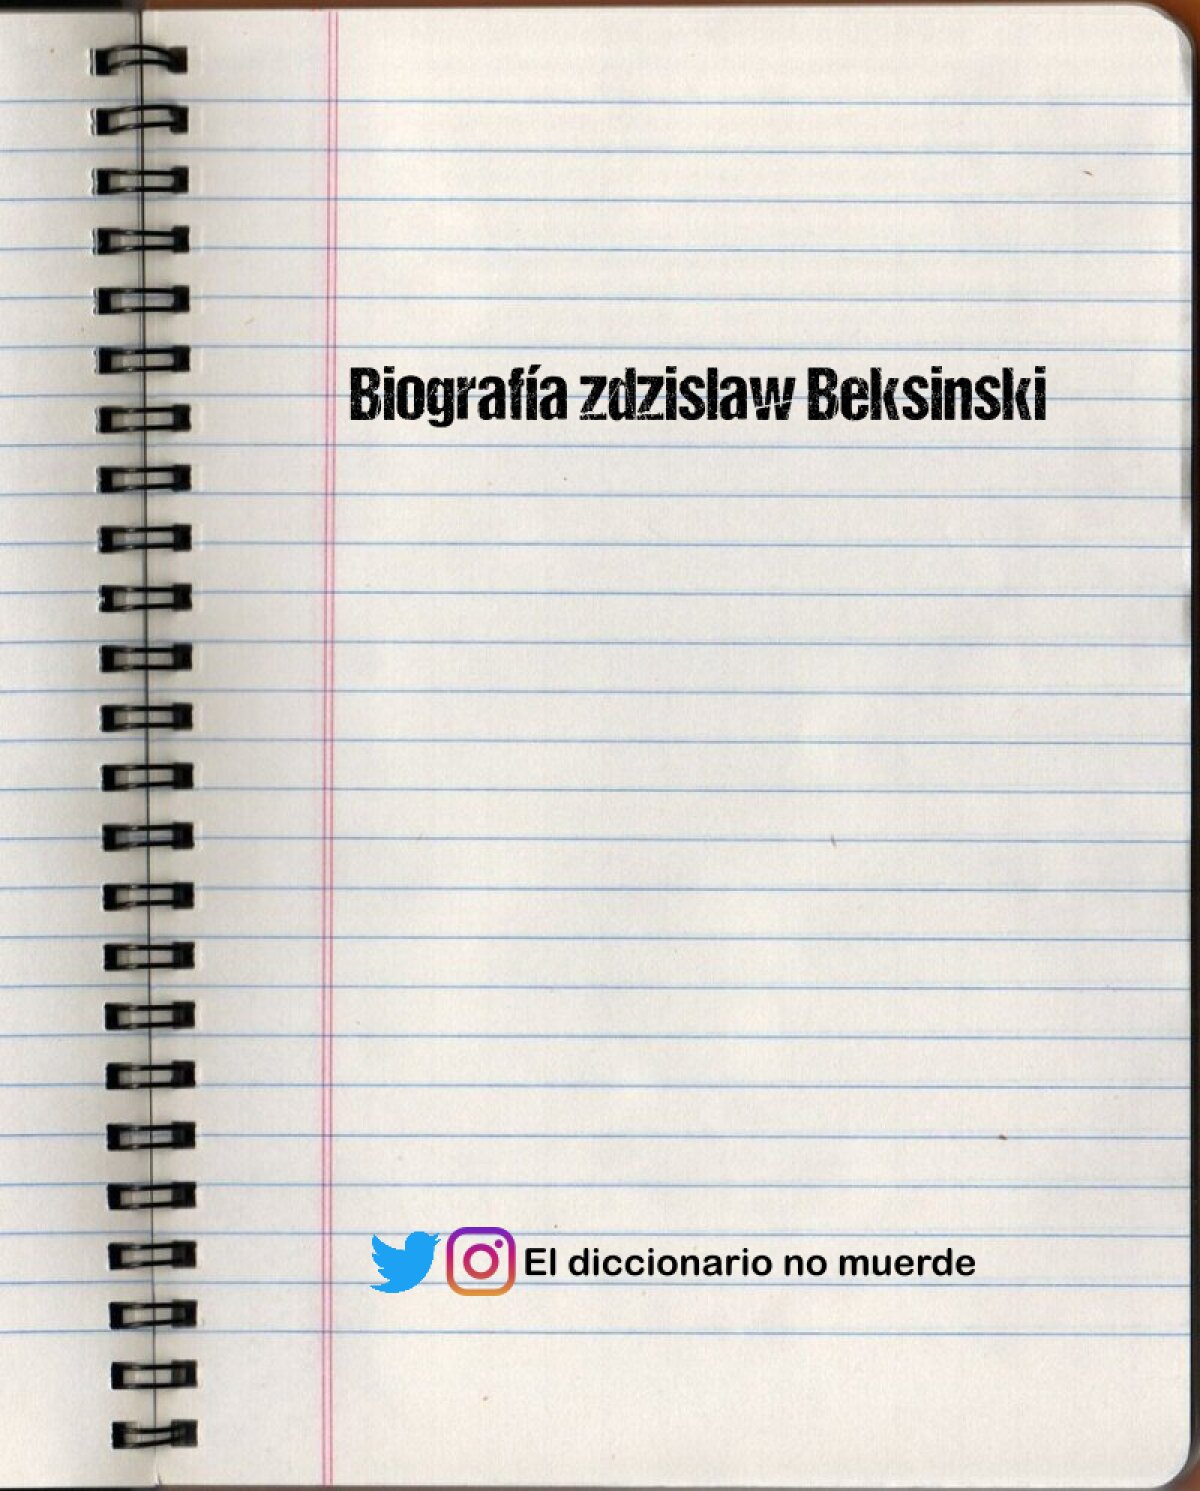 Biografía zdzislaw Beksinski